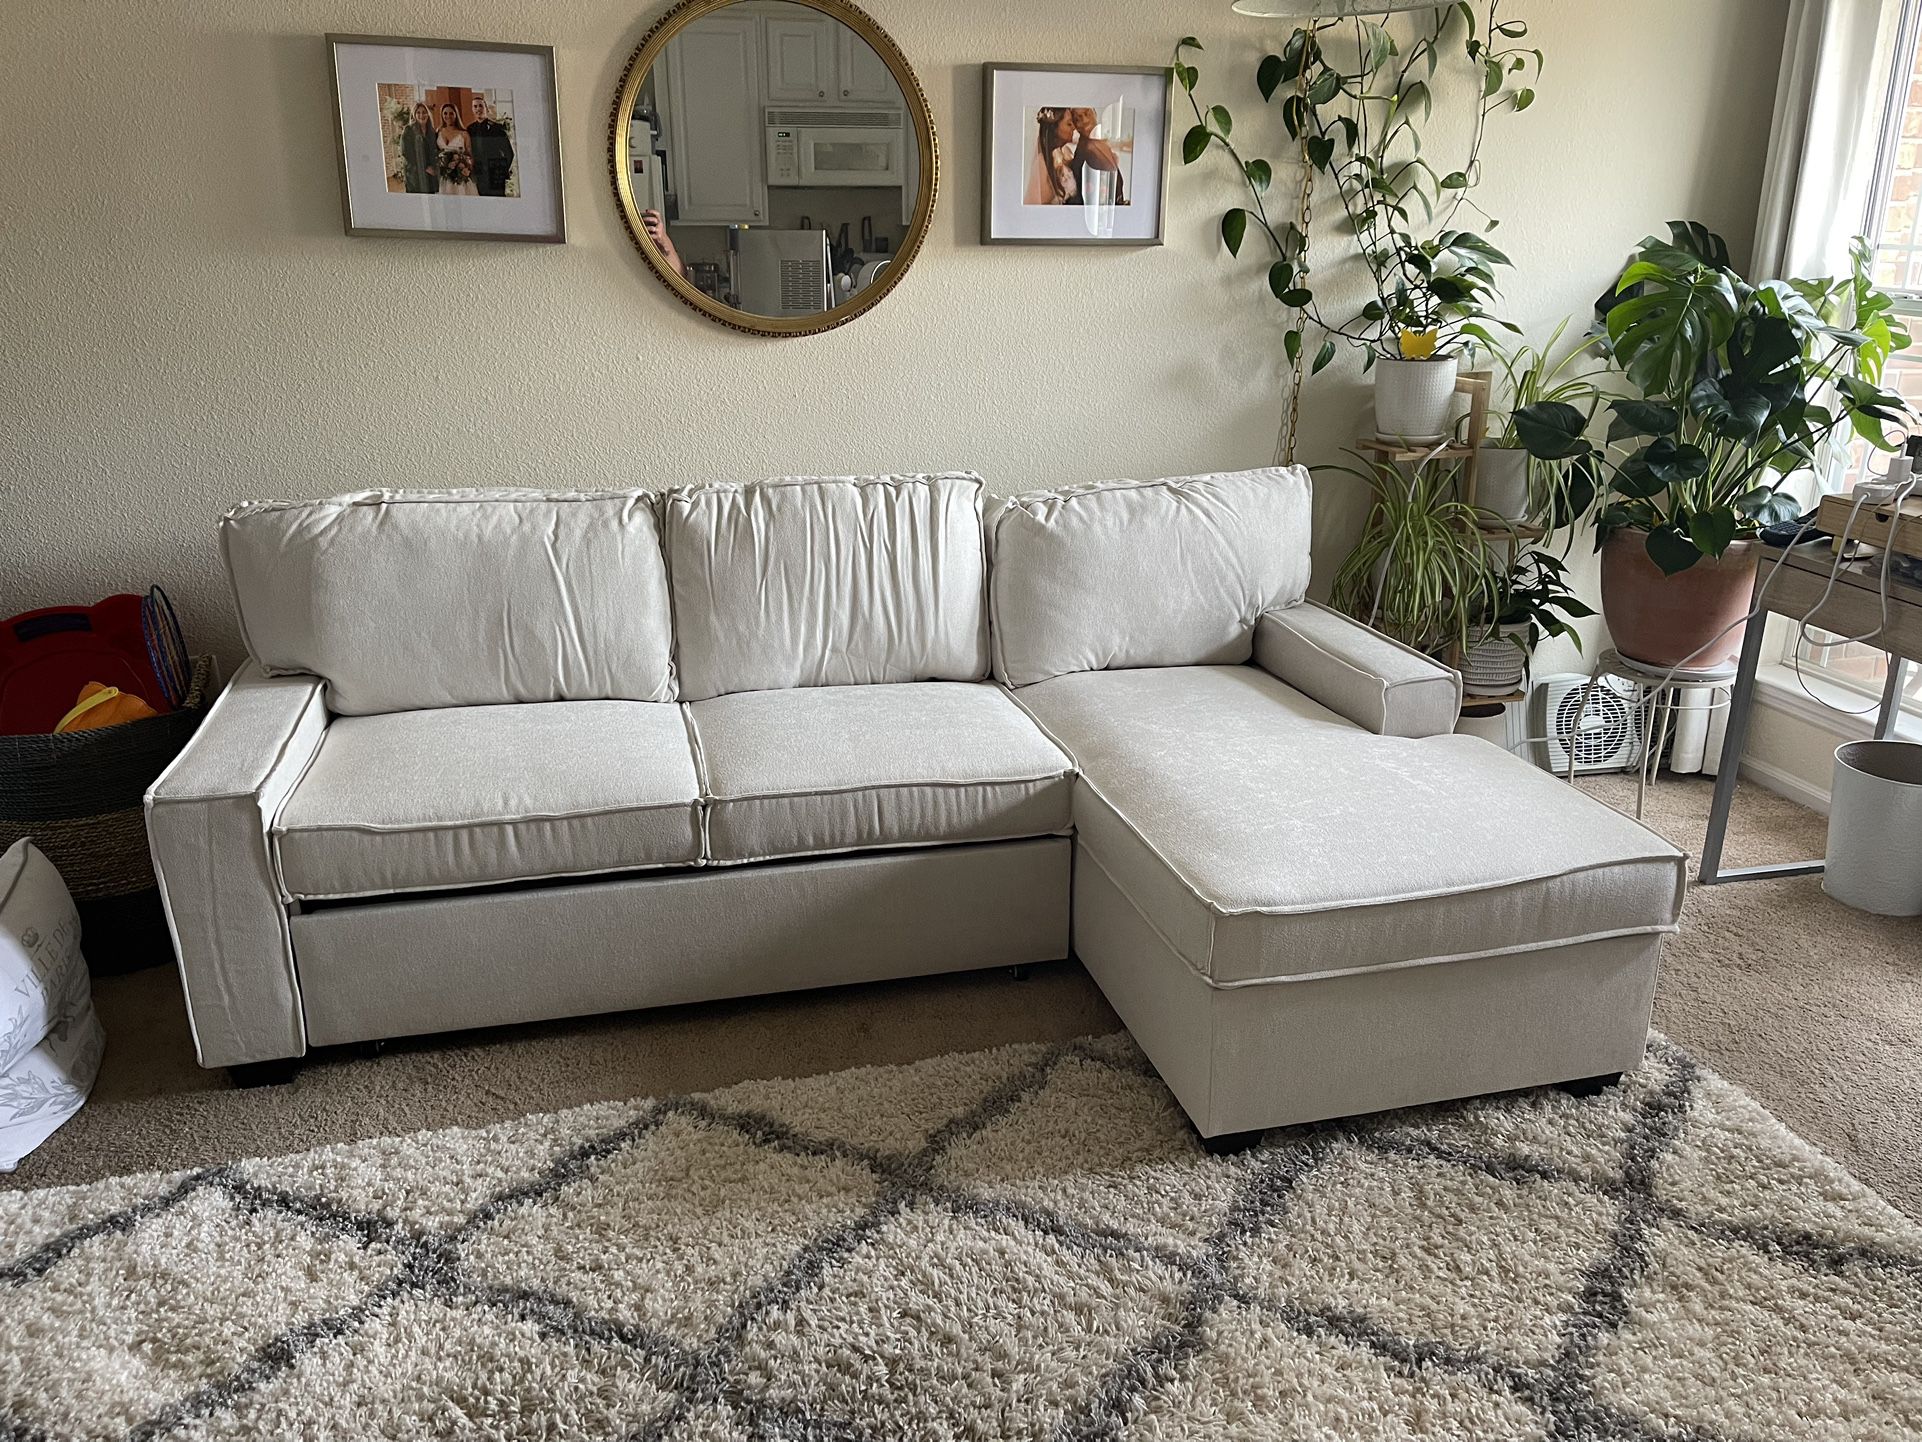 Brand New White Sleeper Sofa